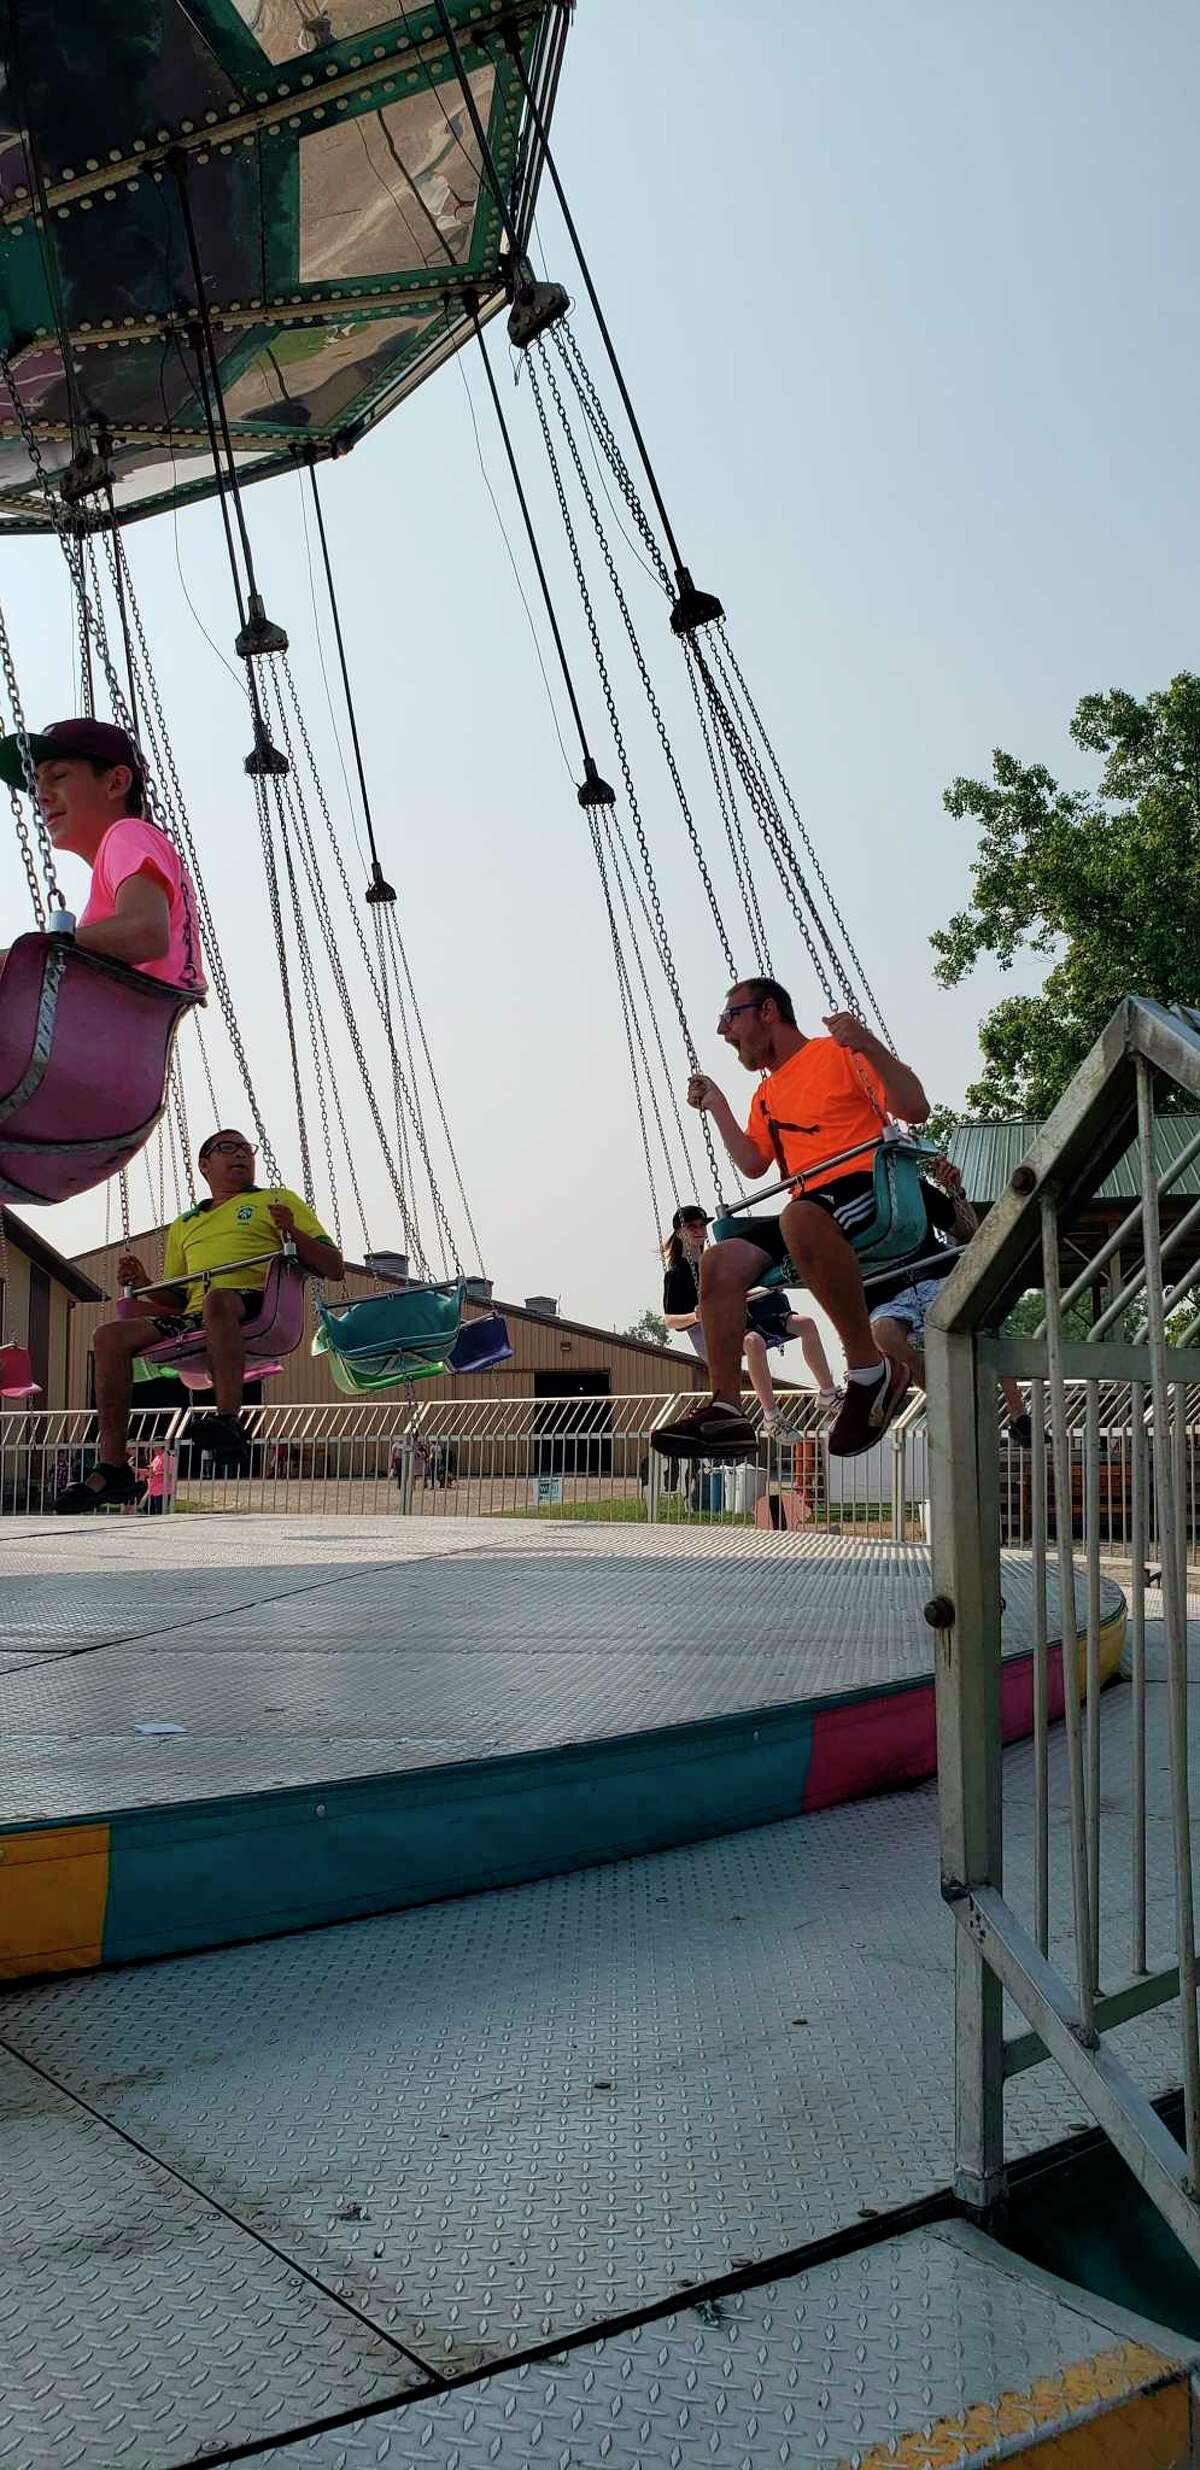 Kids enjoyed riding the swings at the Huron Community Fair. (Courtesy Photo)